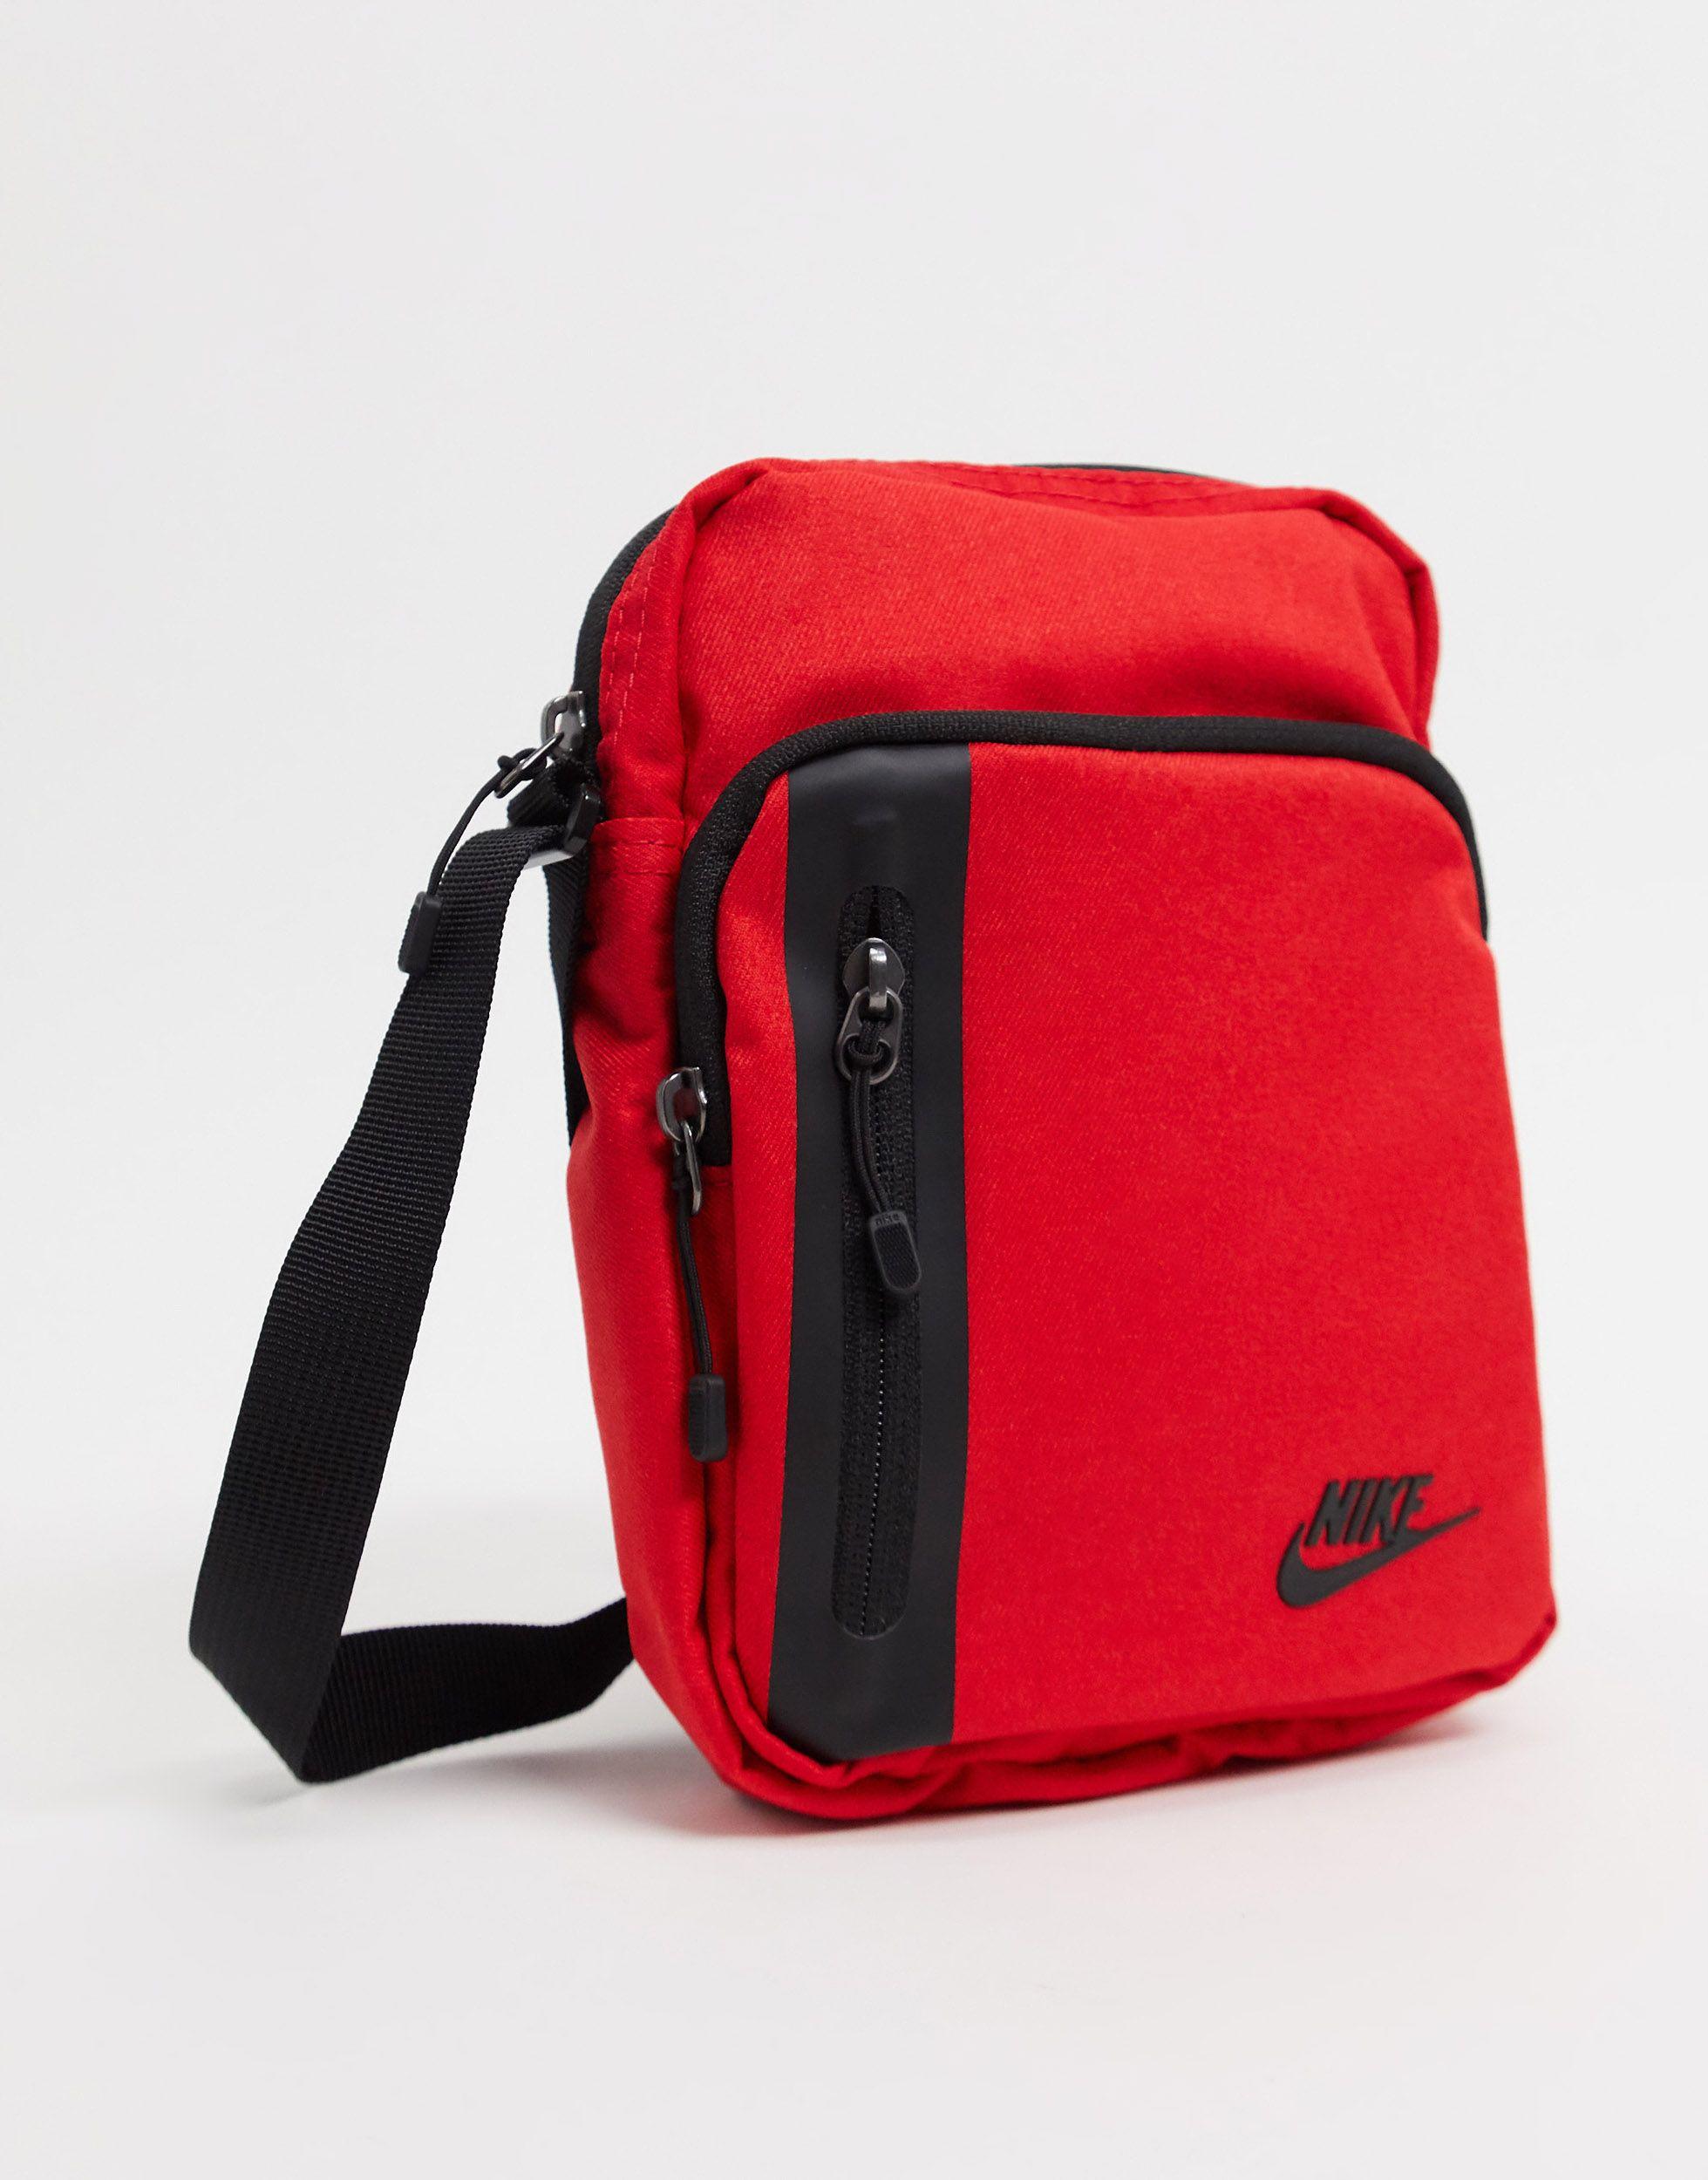 Nike Synthetic Tech Cross-body Bag in Red for Men - Lyst